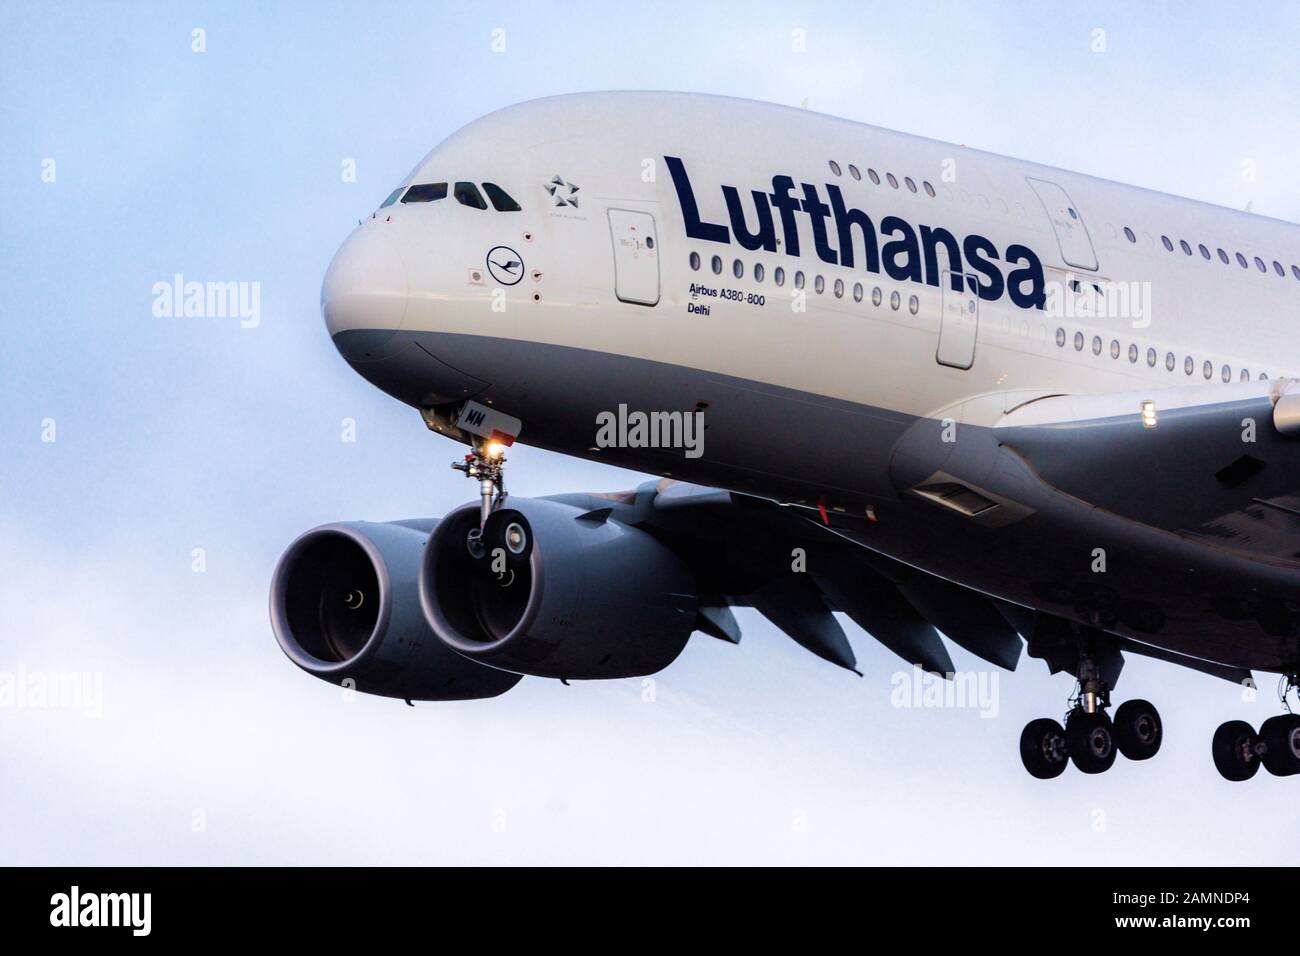 FRANKFURT, GERMANY - DECEMBER 23, 2019: Lufthansa Airbus A380-800 Landing at Frankfurt Airport closeup Stock Photo